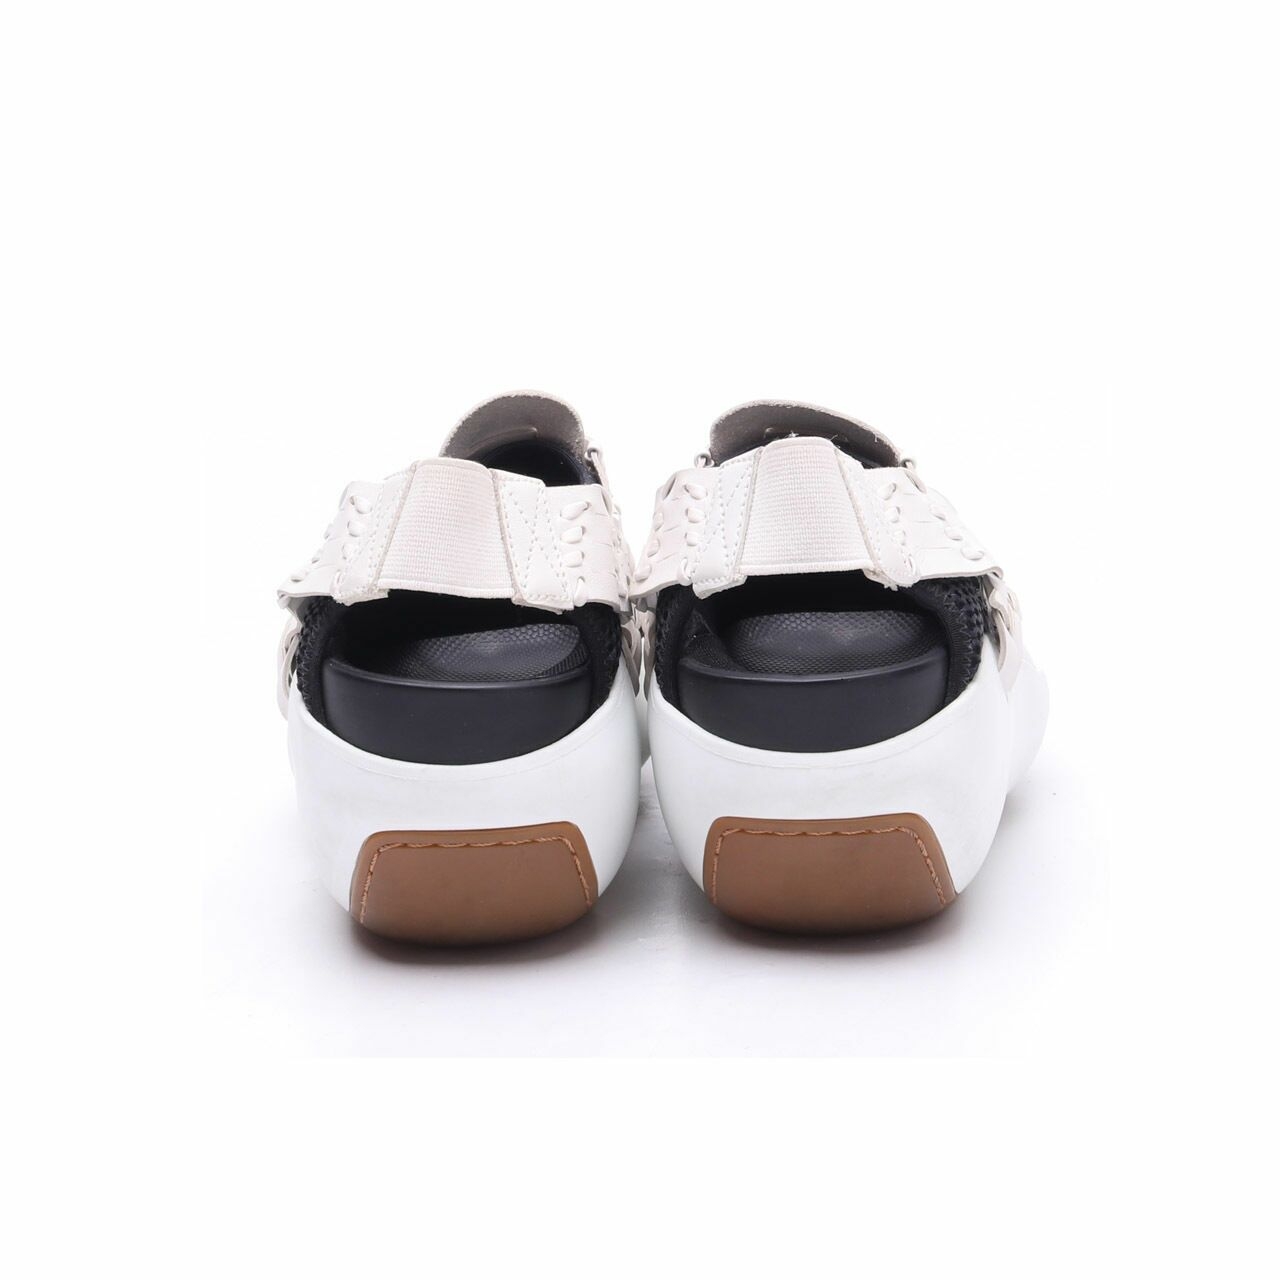 Camper Black & White Sandals